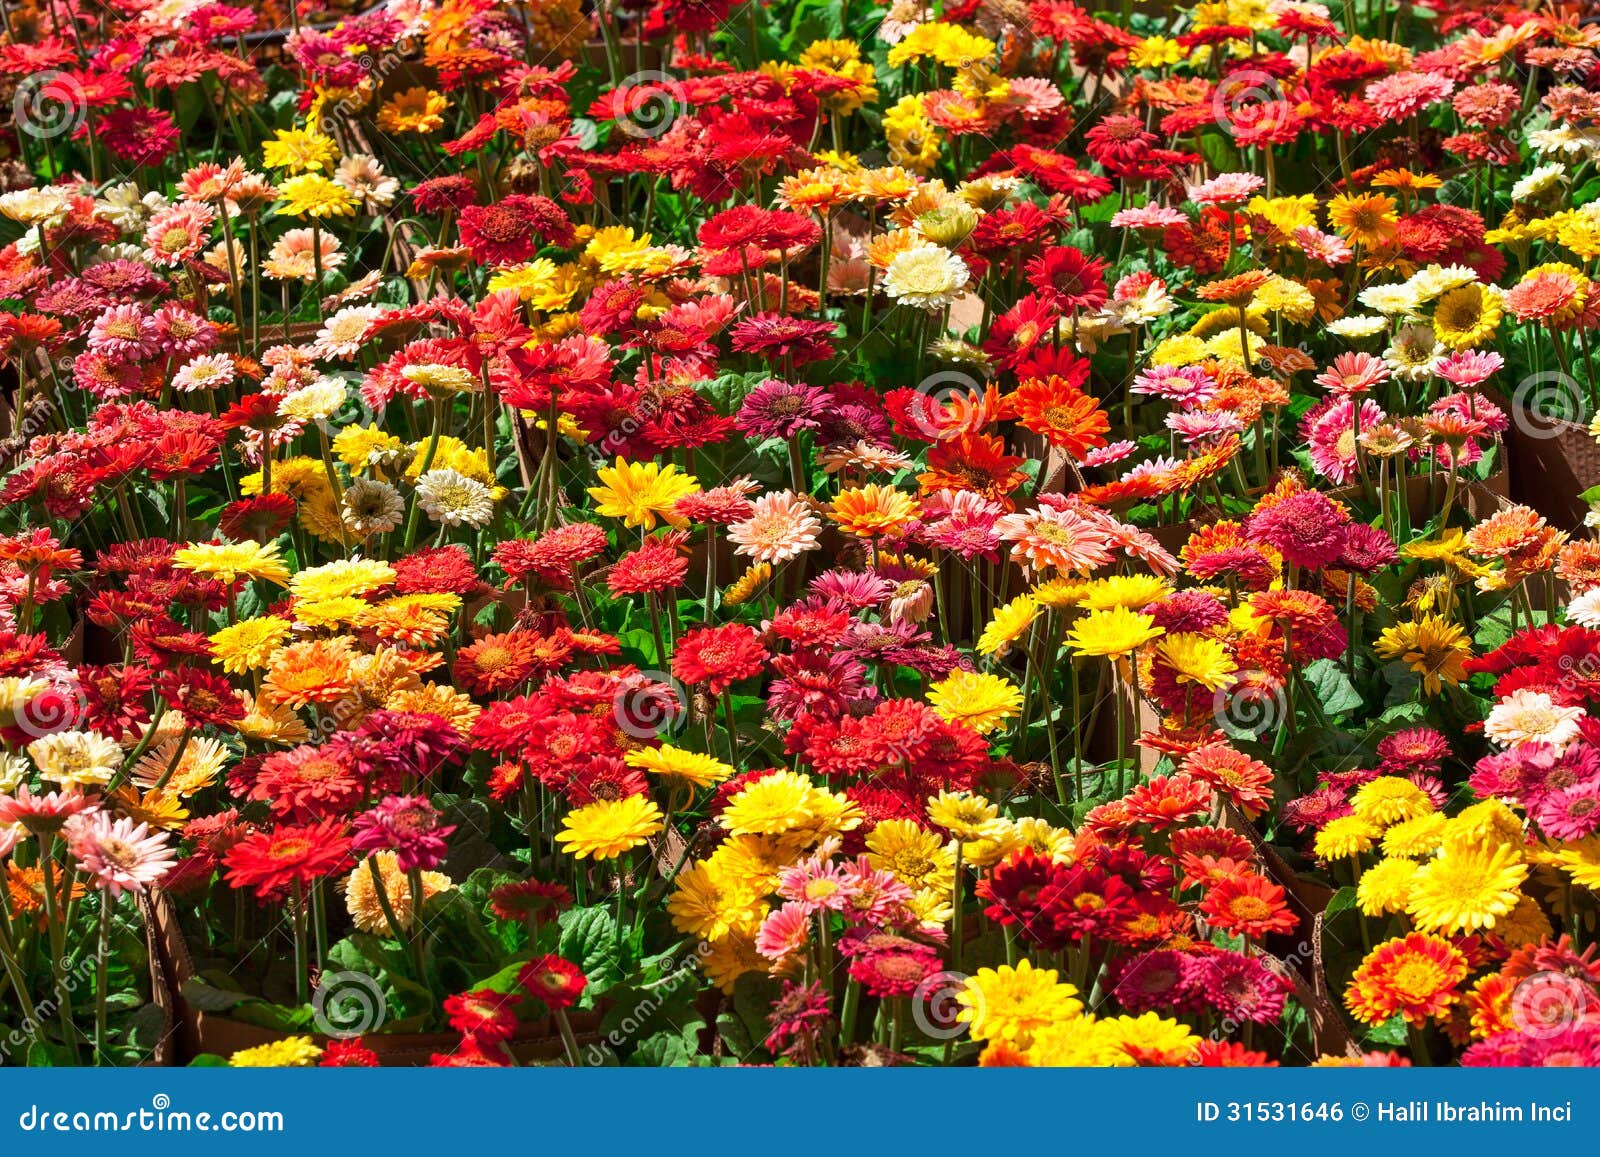 colorful gerbera flowers